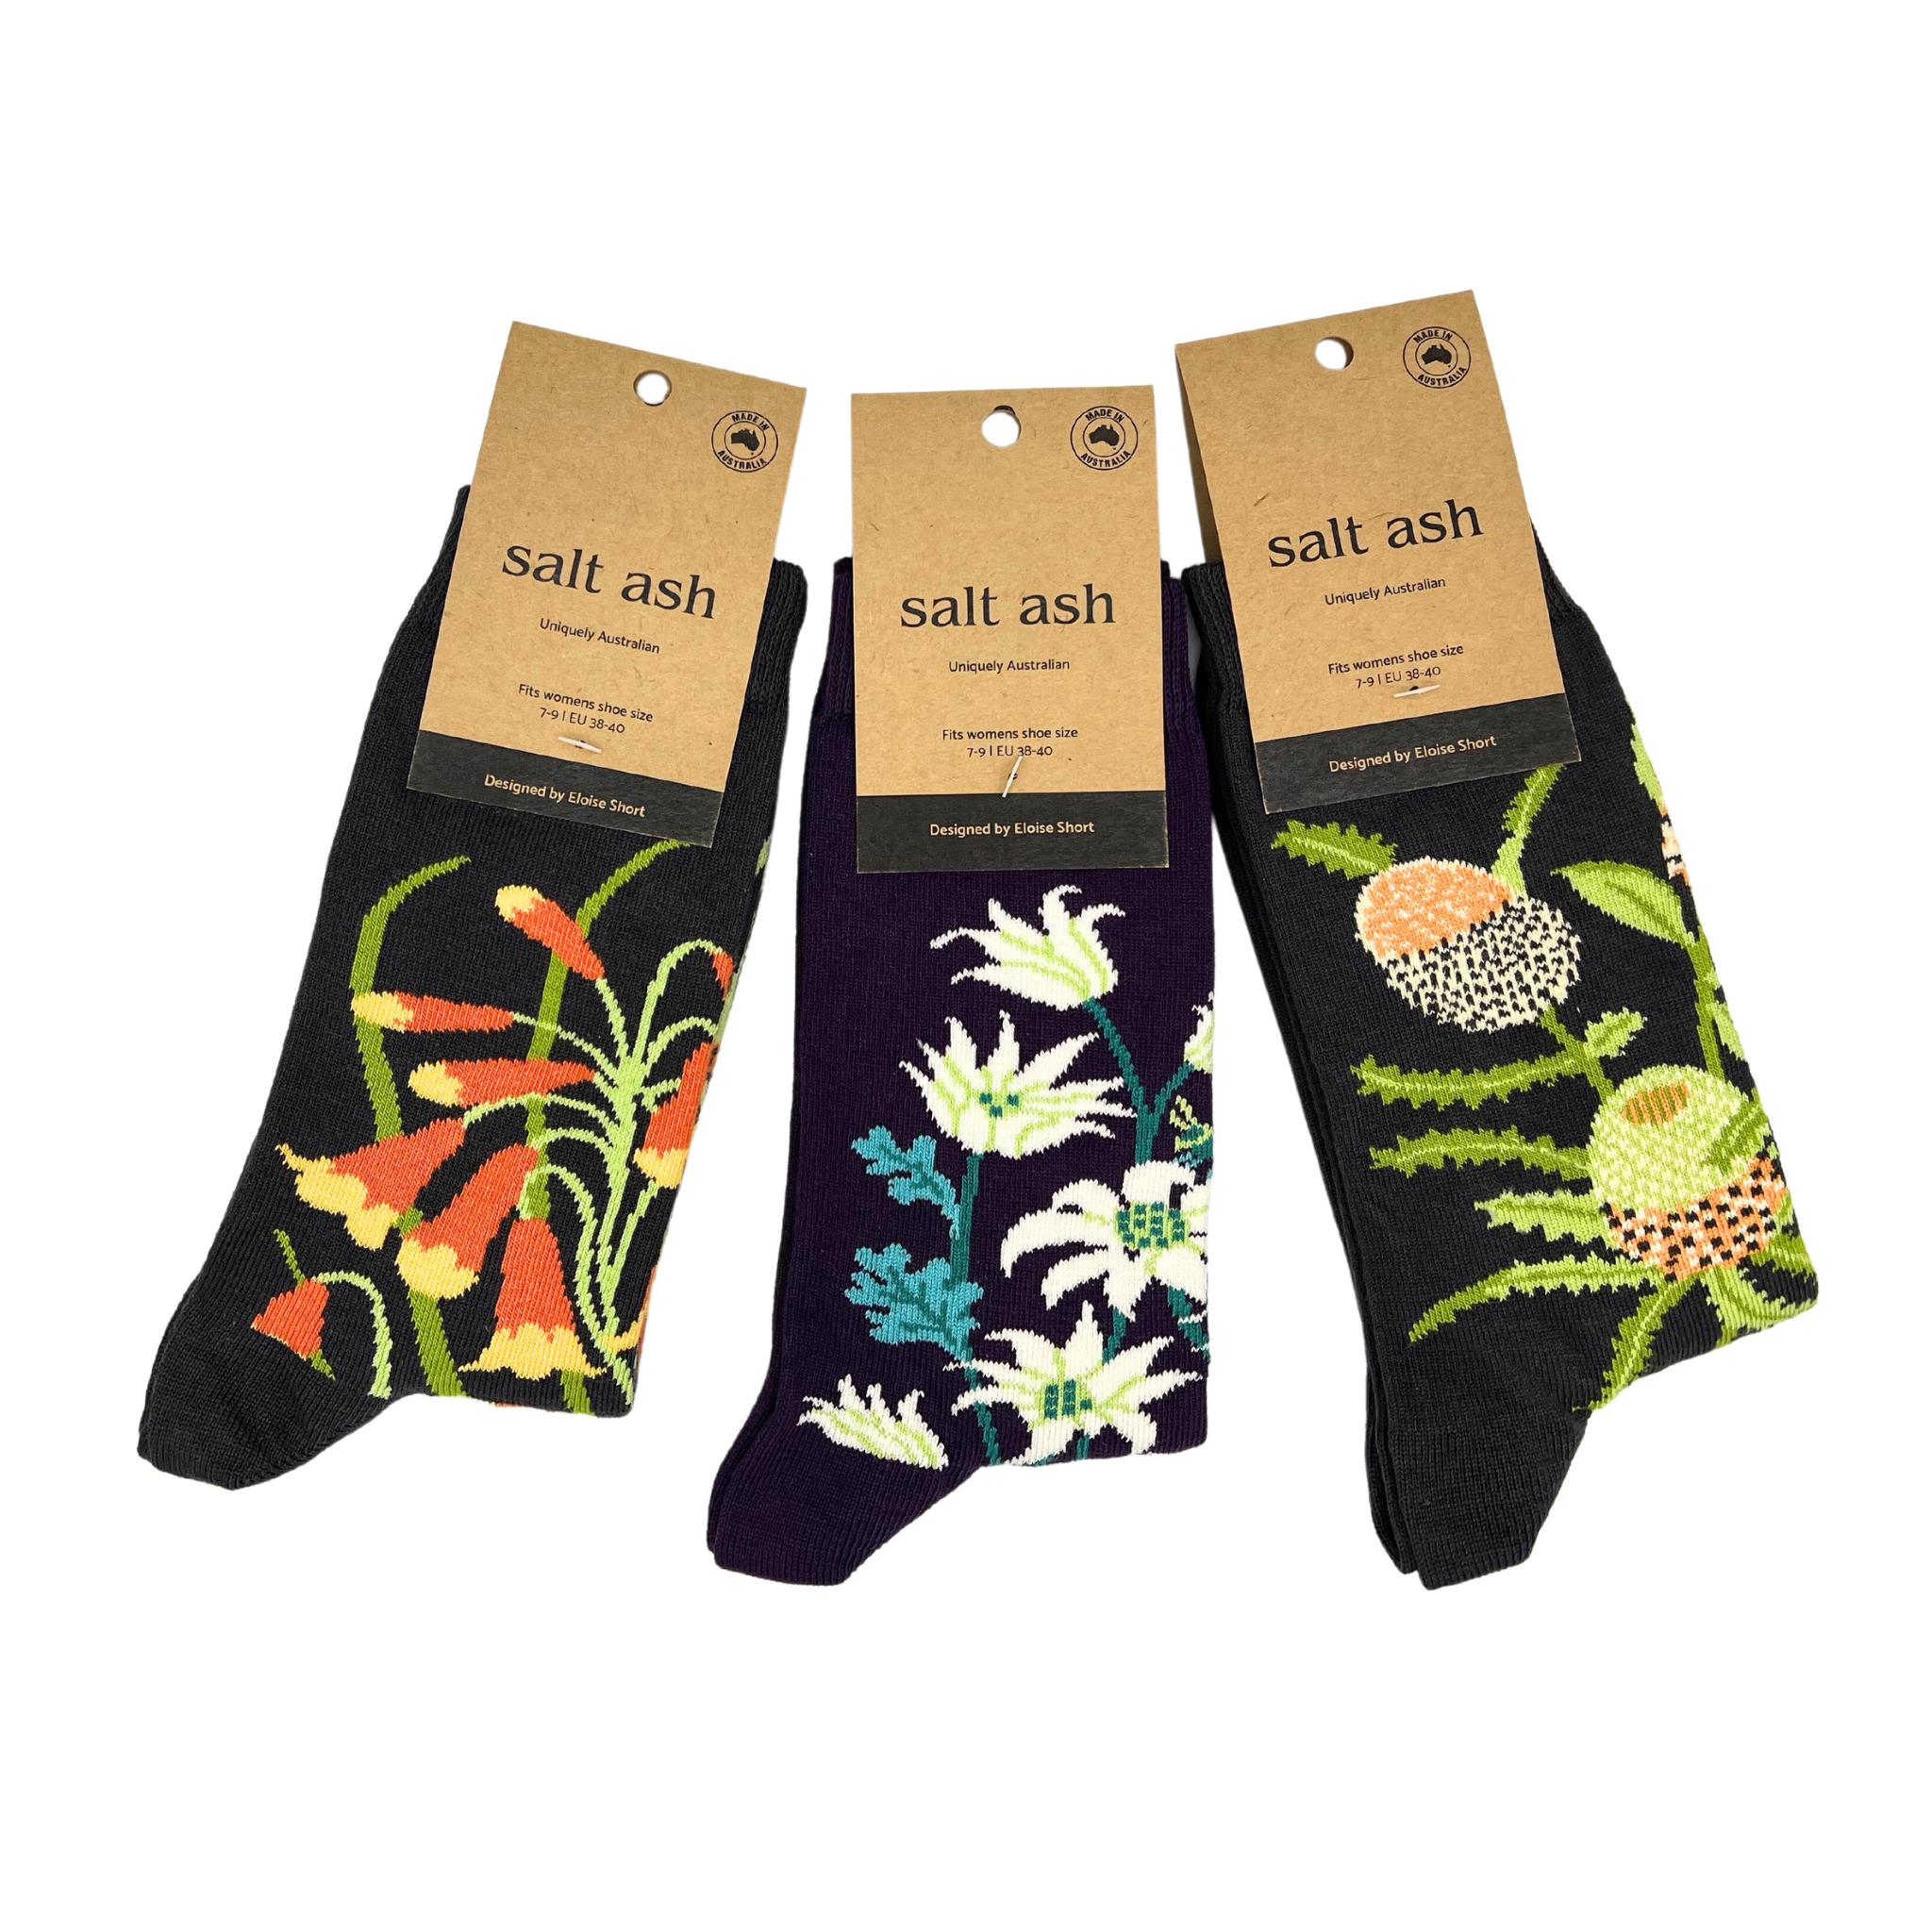 3 socks available in australian floral sock range - The Sockery